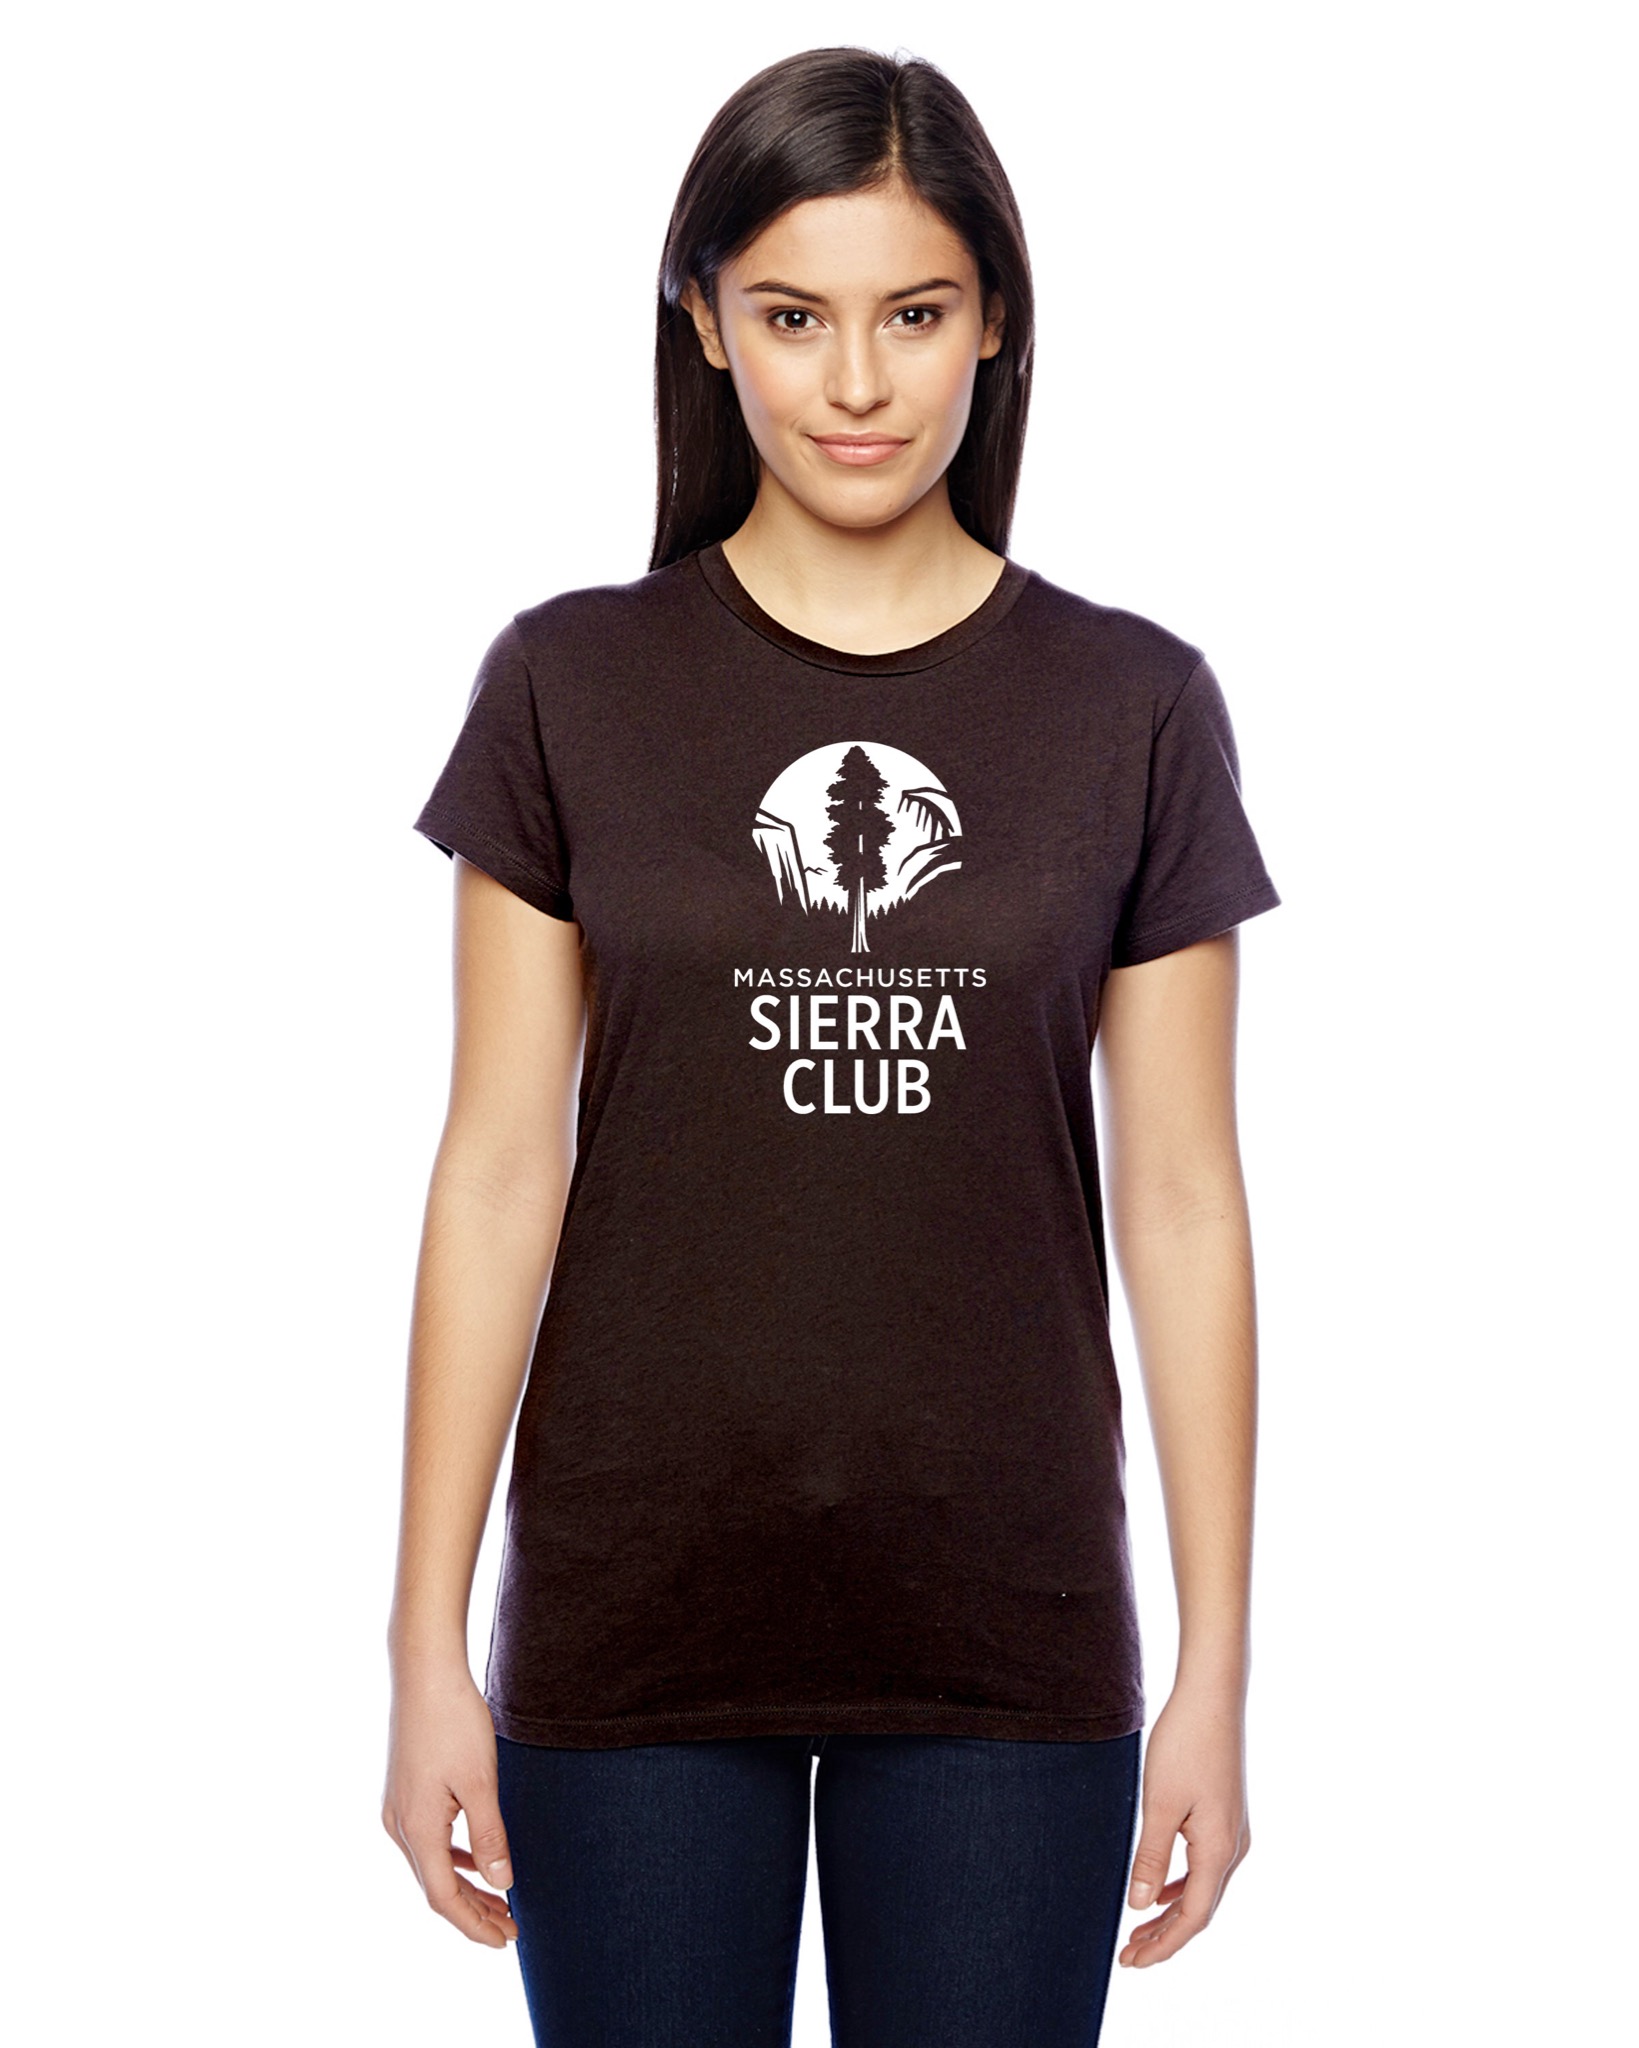 Female model wearing chocolate brown shortsleeved Massachusetts Sierra Club tshirt 